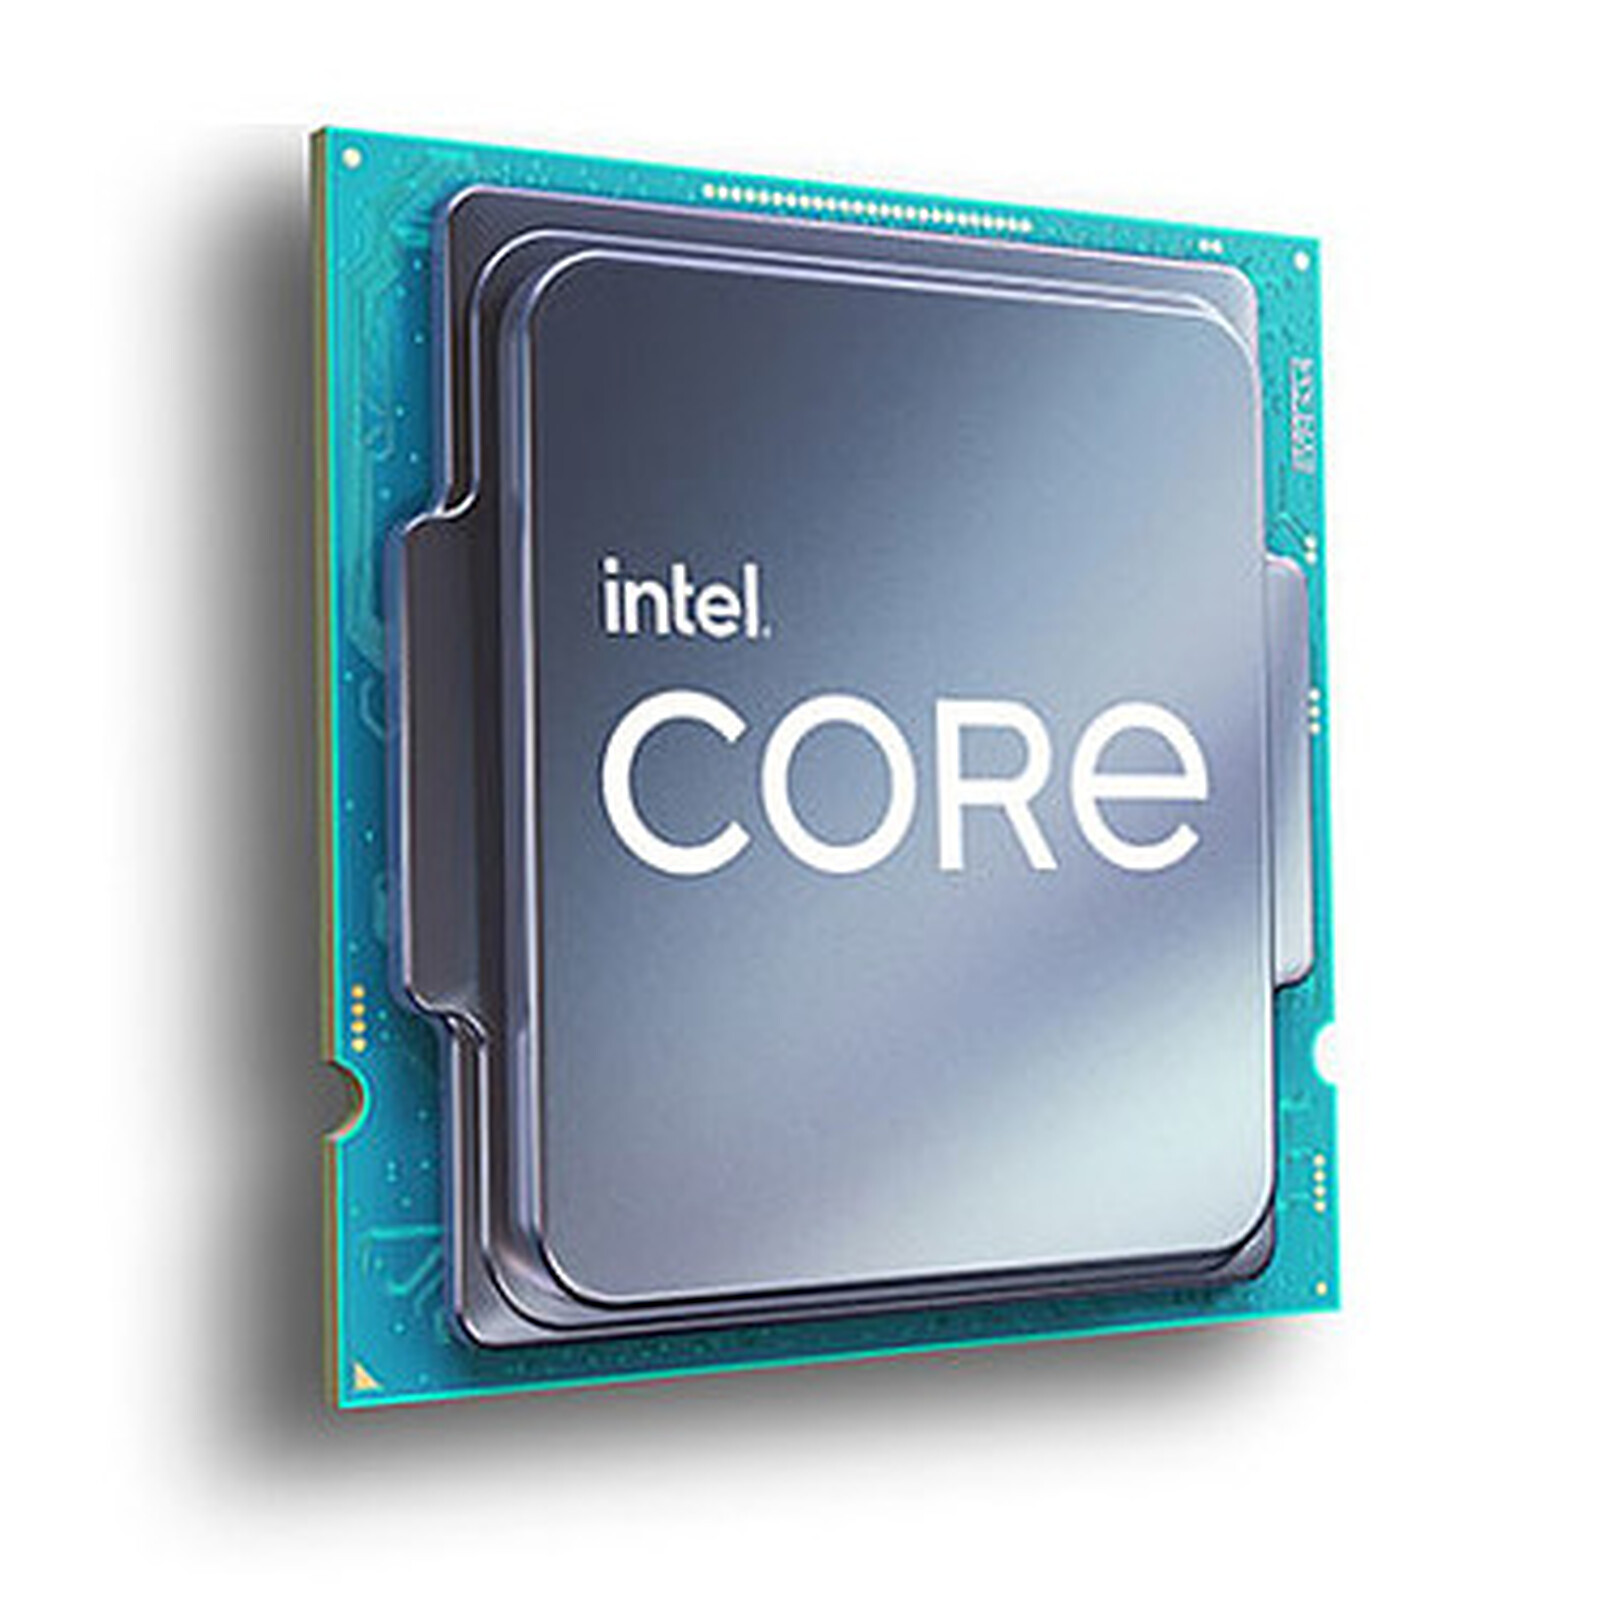 Intel Core iK 3.6 GHz / 5.0 GHz Bulk   Processor   LDLC